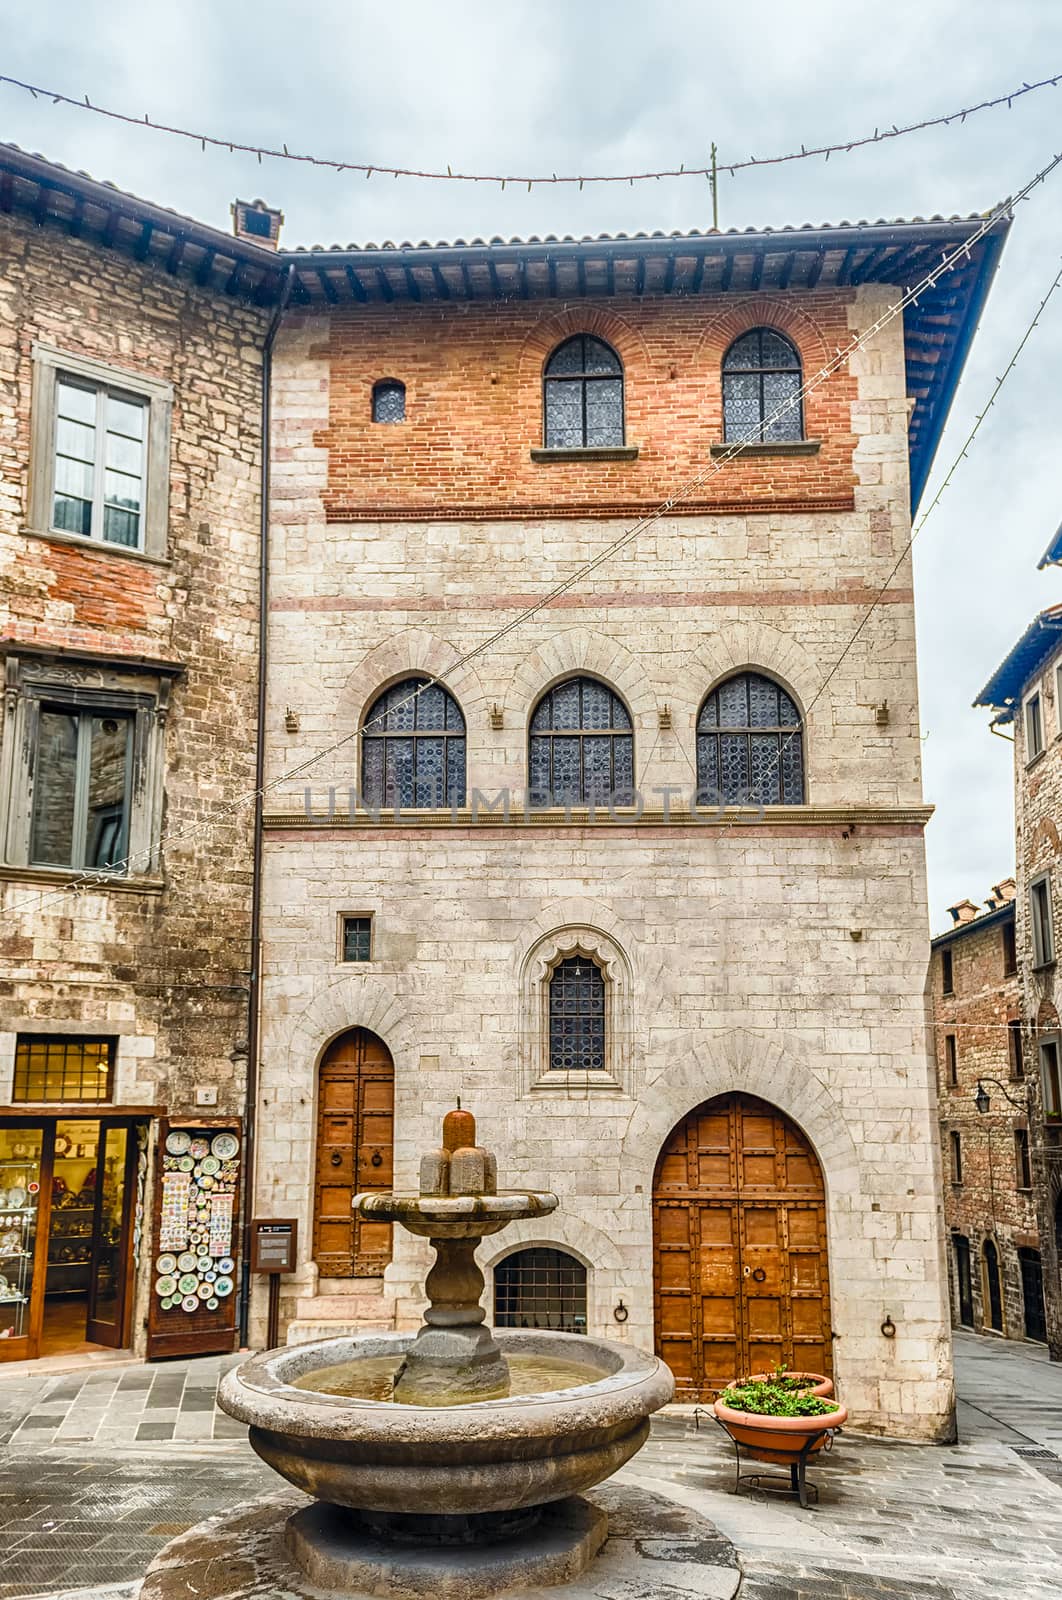 View of Palazzo del Bargello, medieval building in Gubbio, Italy by marcorubino